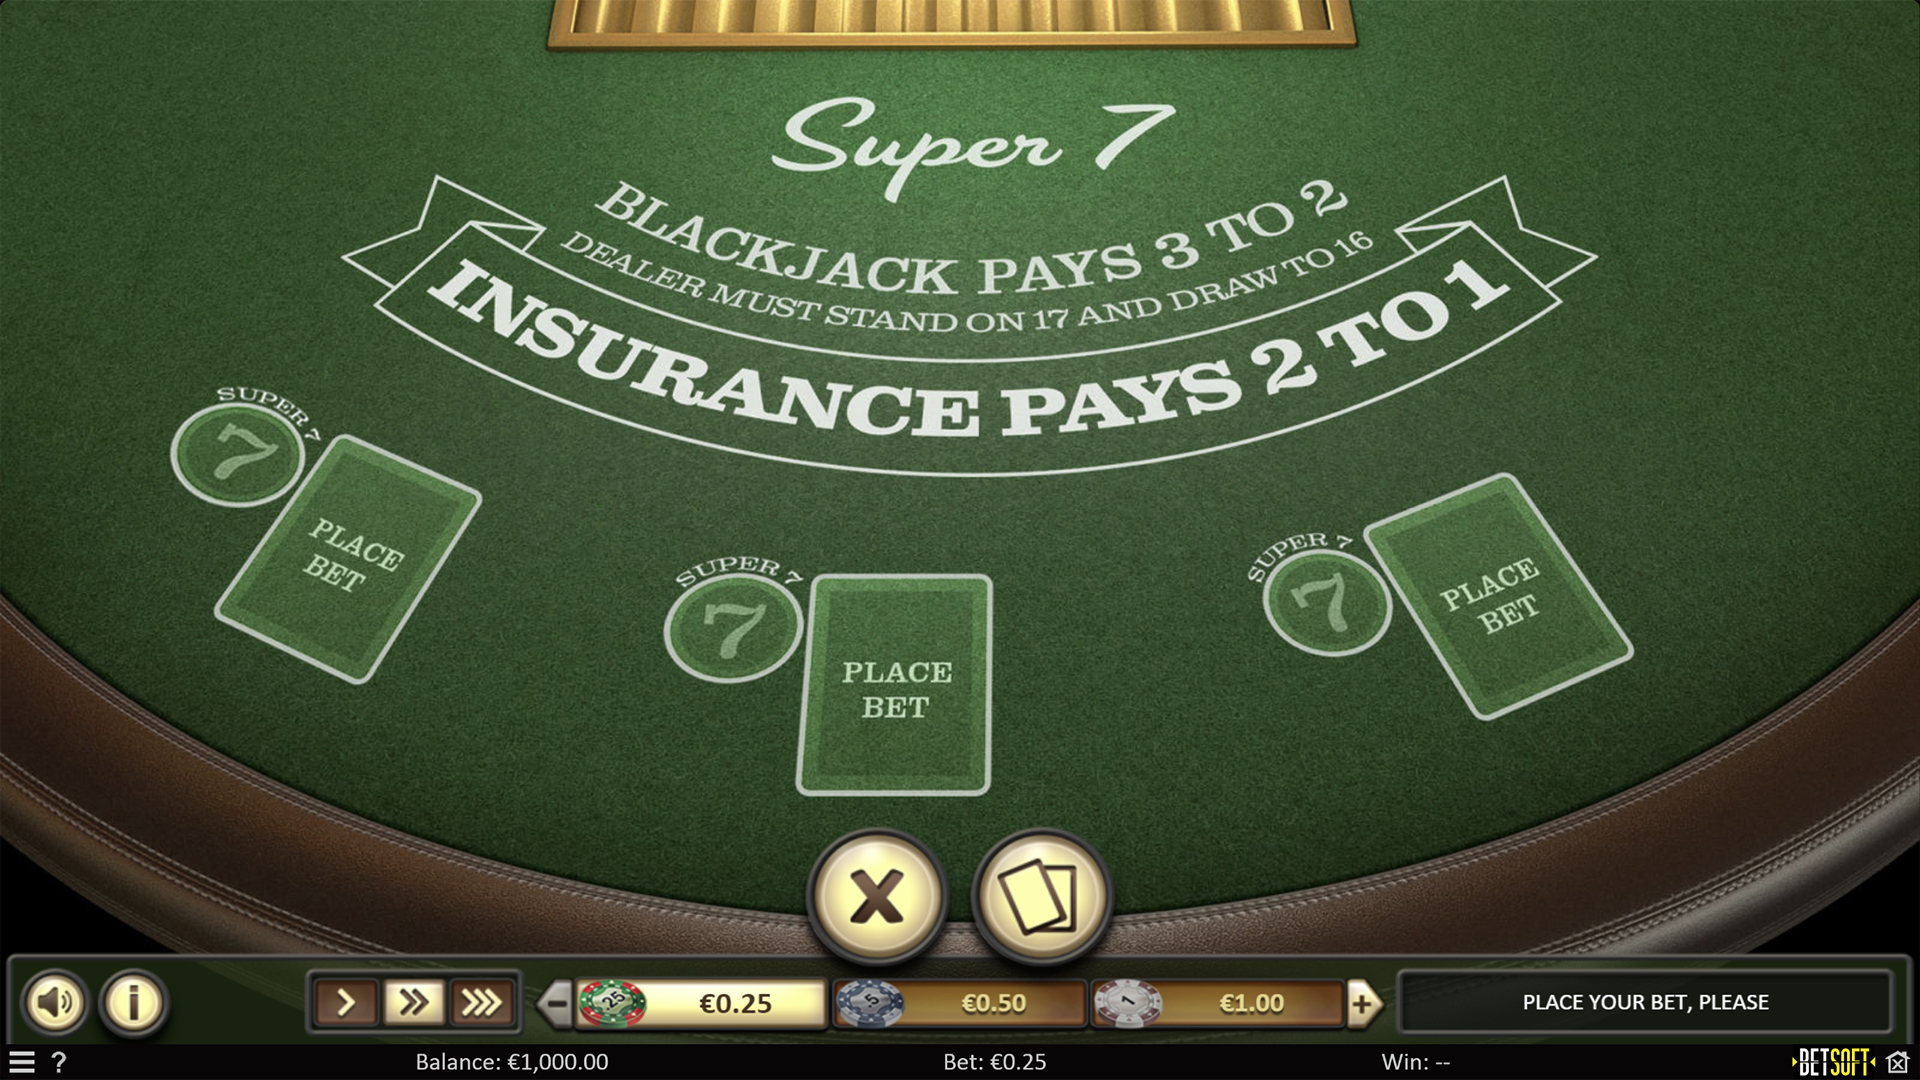 Super 7 Blackjack - Screenshot 01